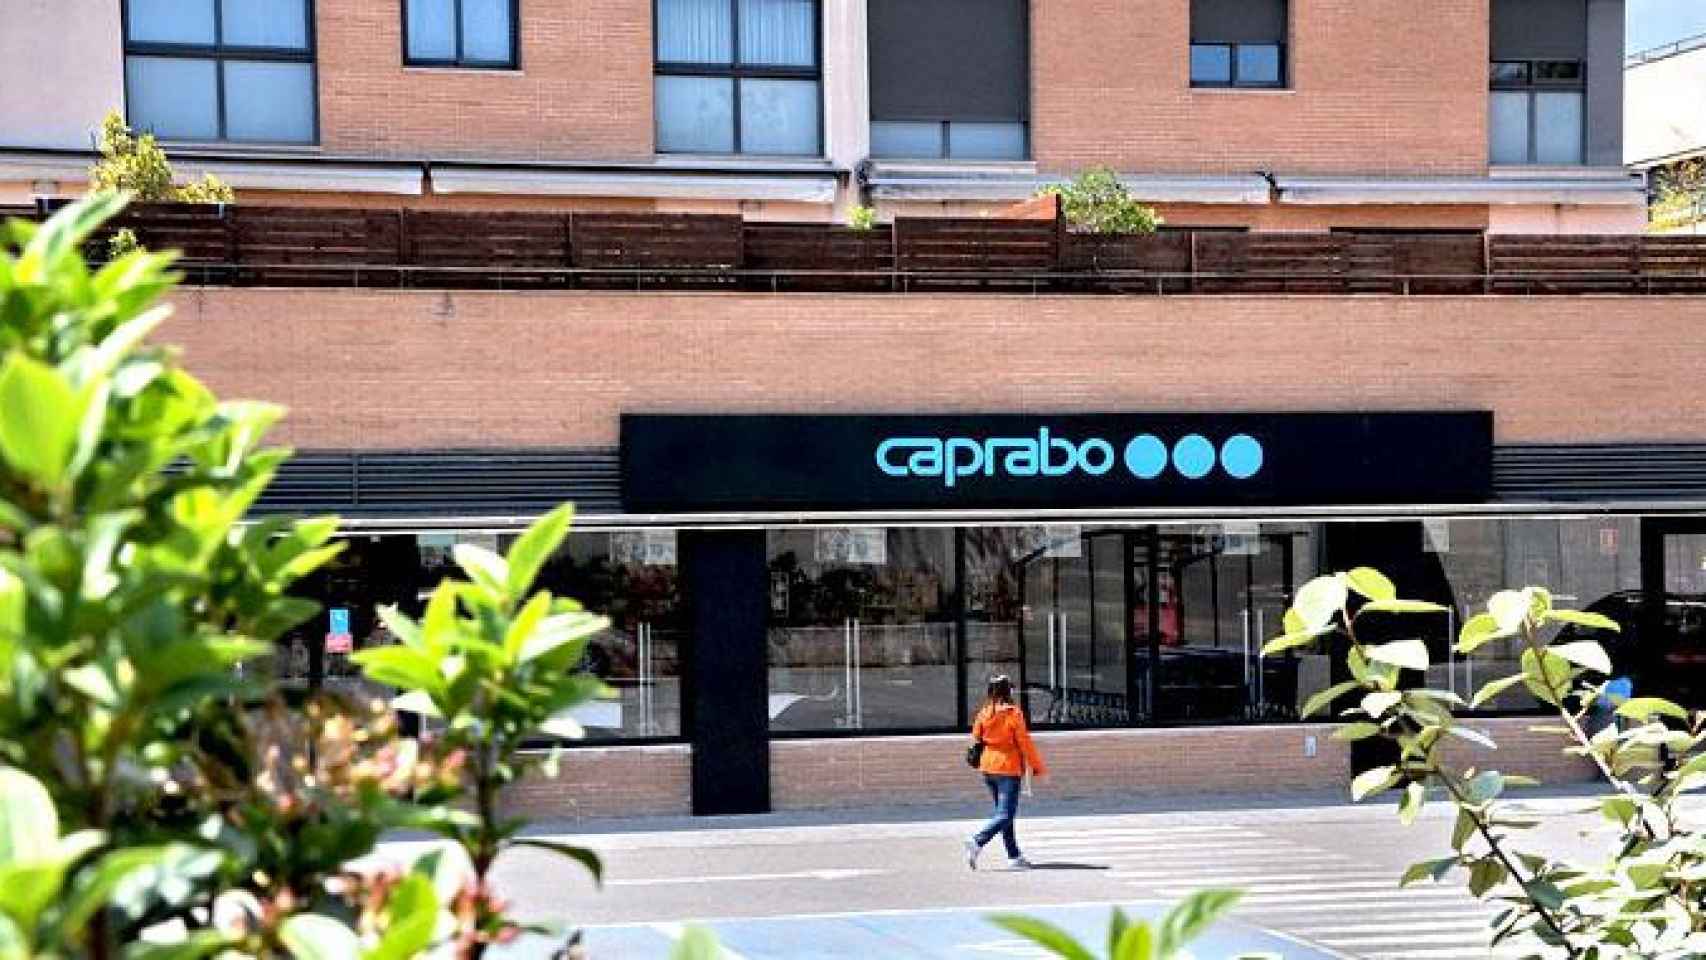 Entrada de un supermercado de la cadena Caprabo / CAPRABO